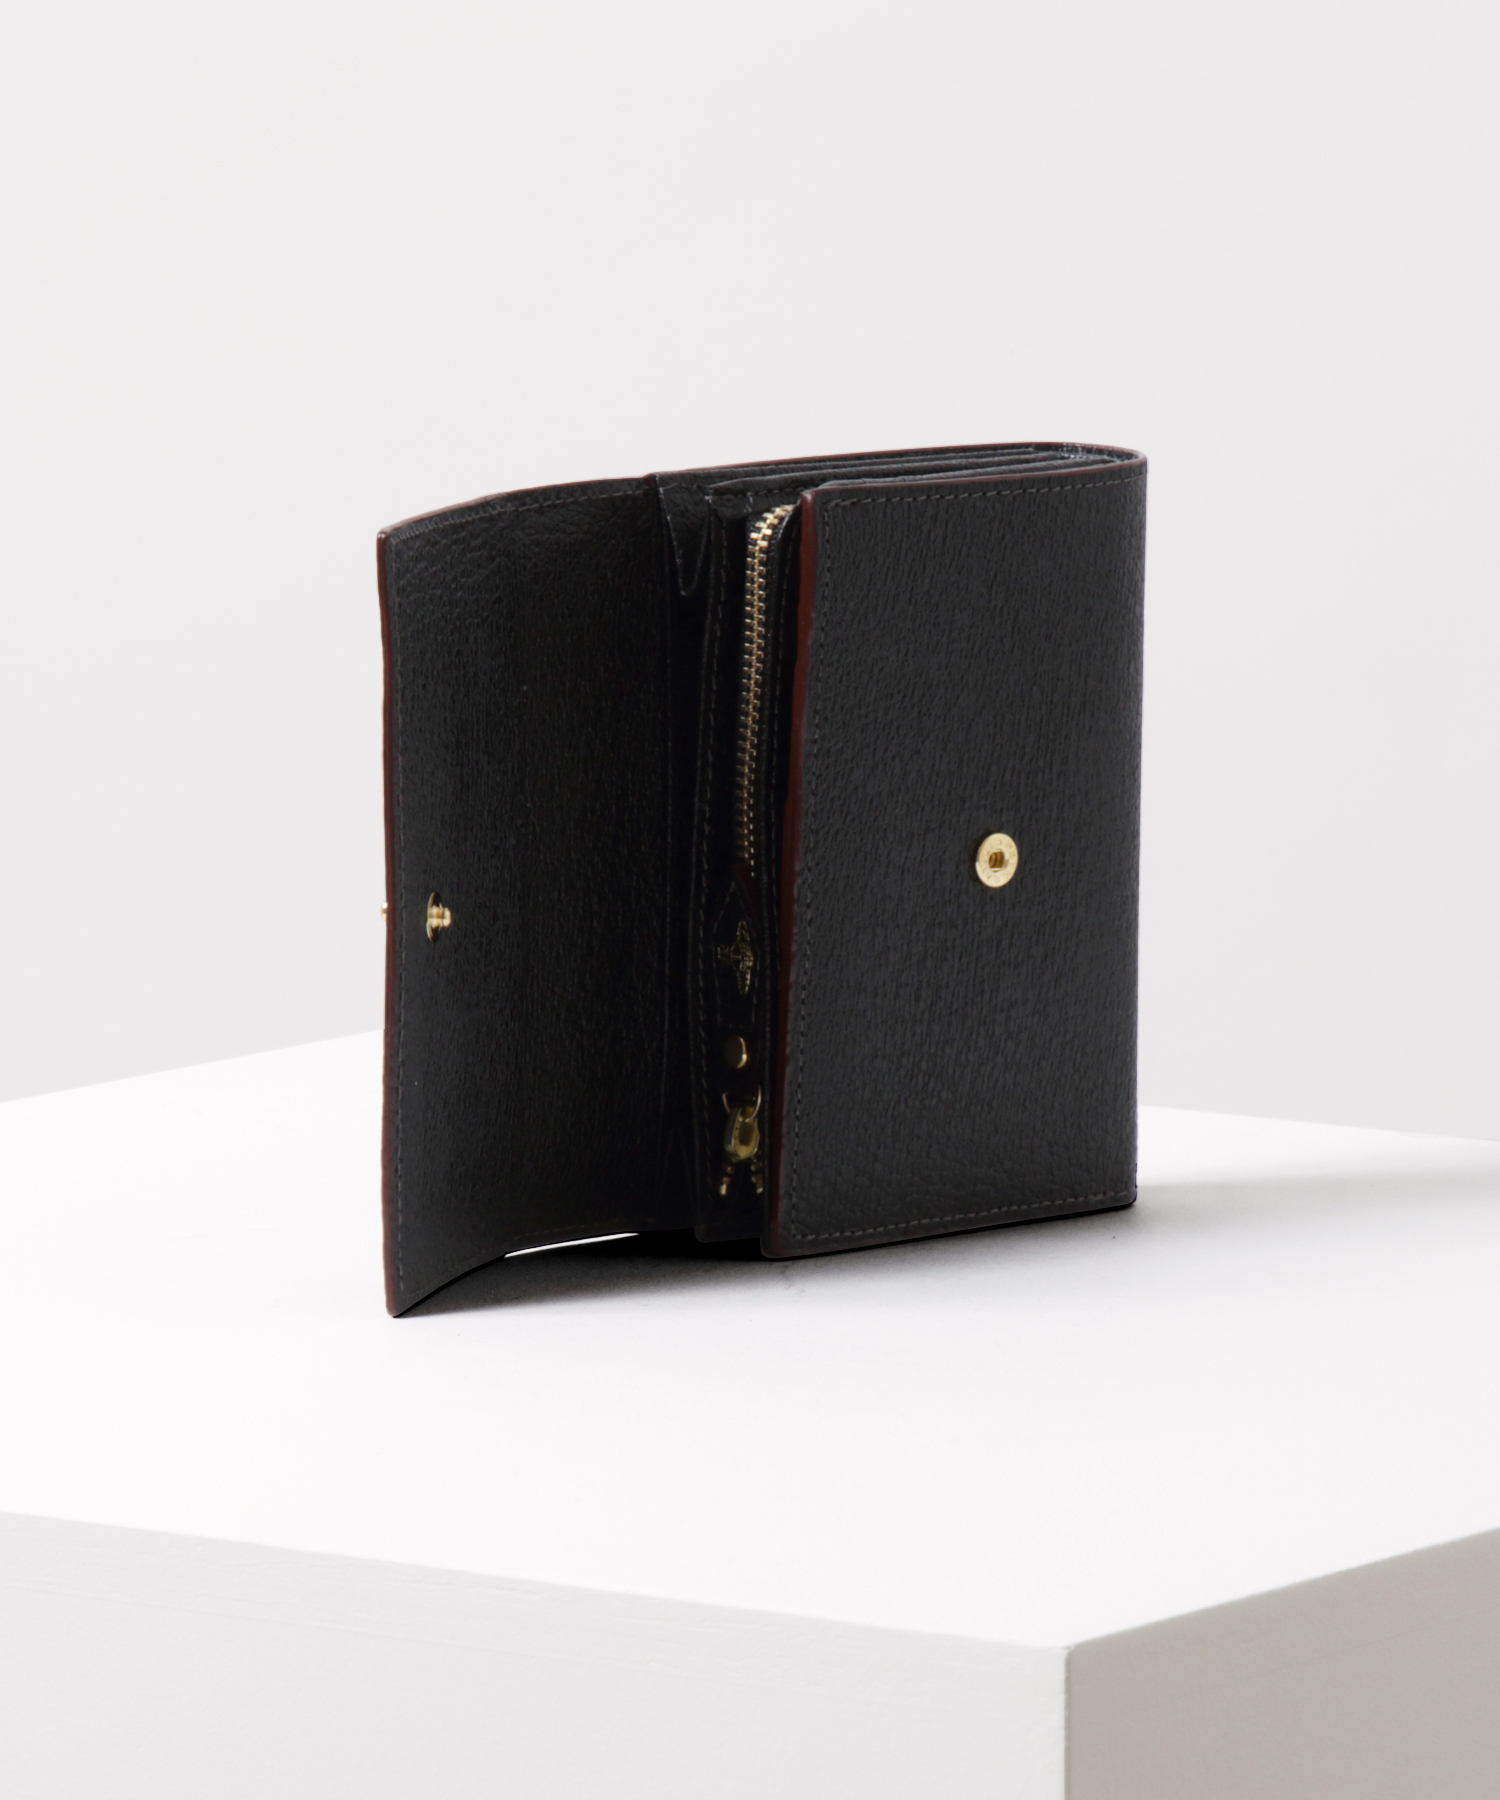 ⭐️新品 Vivienne Westwood 二つ折り 財布　ブラック